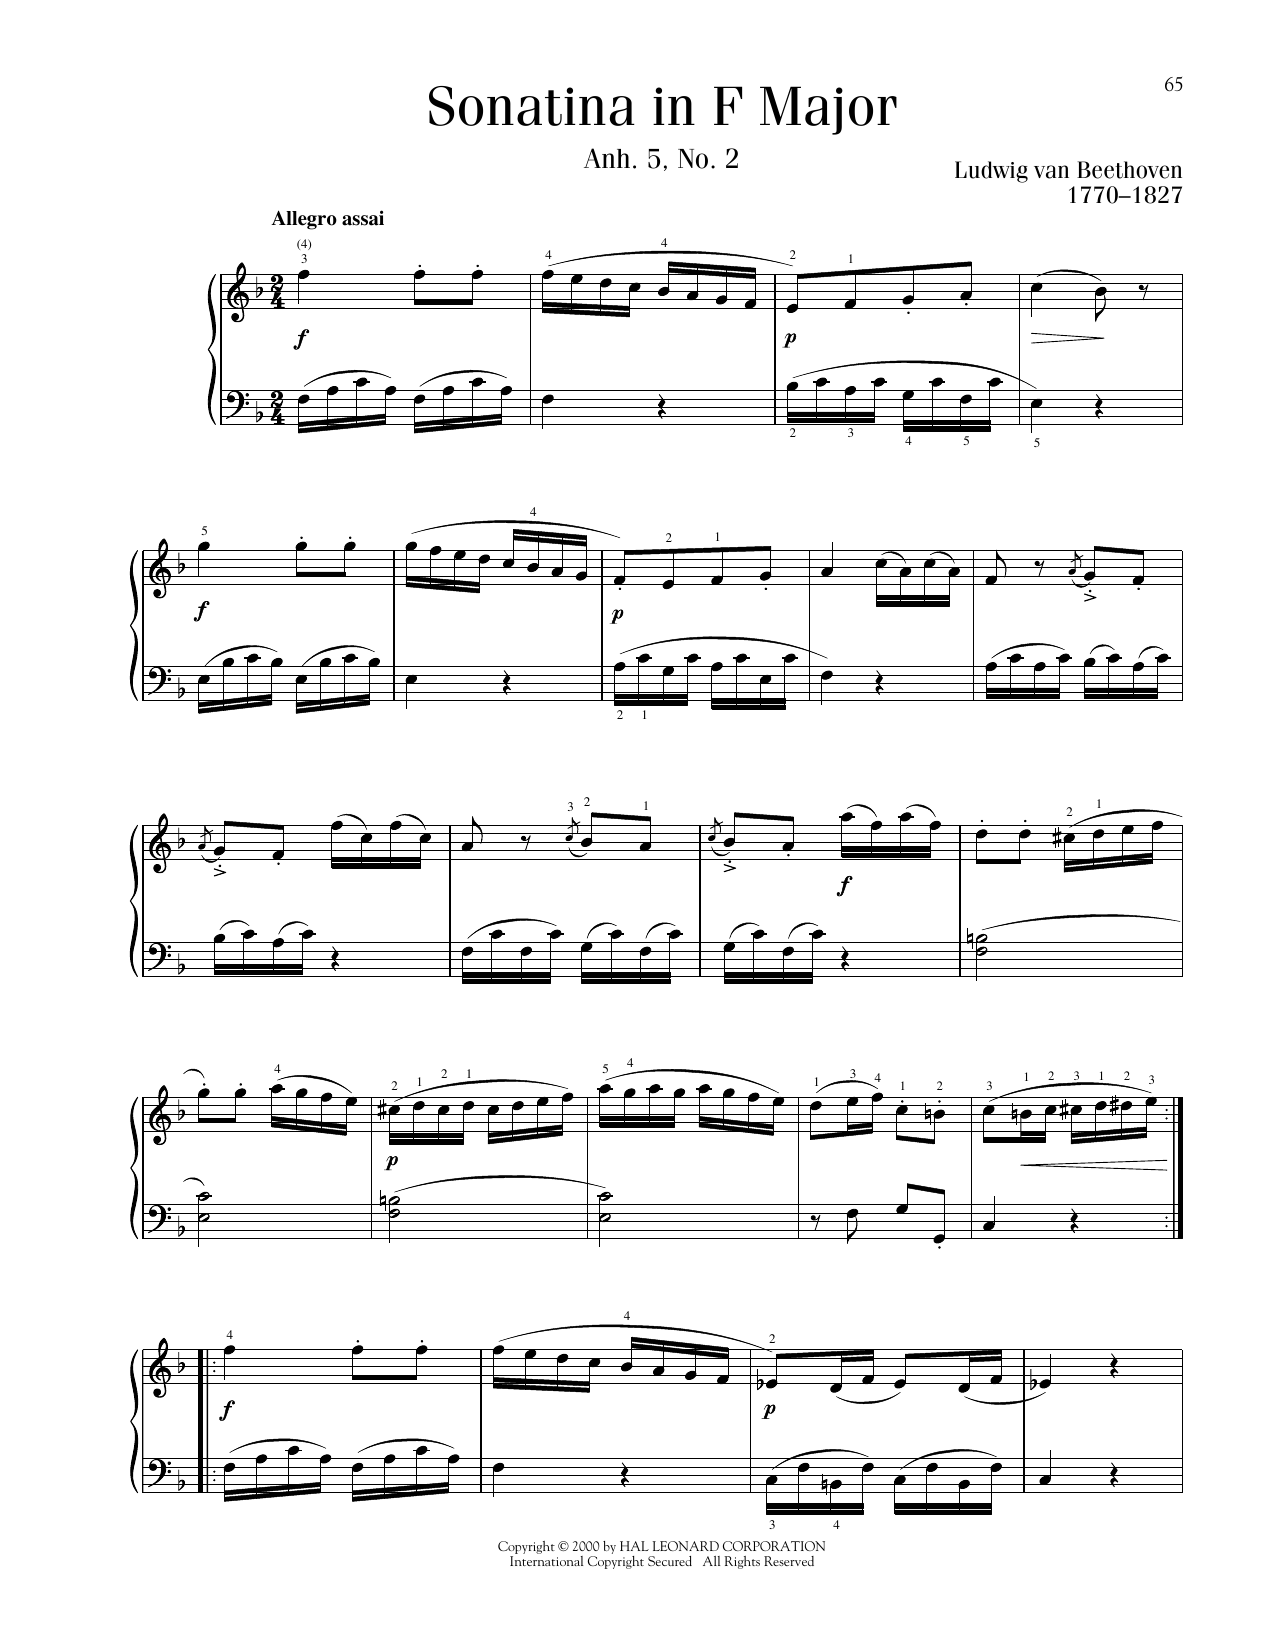 Ludwig van Beethoven Sonatina In F Major, Anh. 5, No. 2 sheet music notes printable PDF score